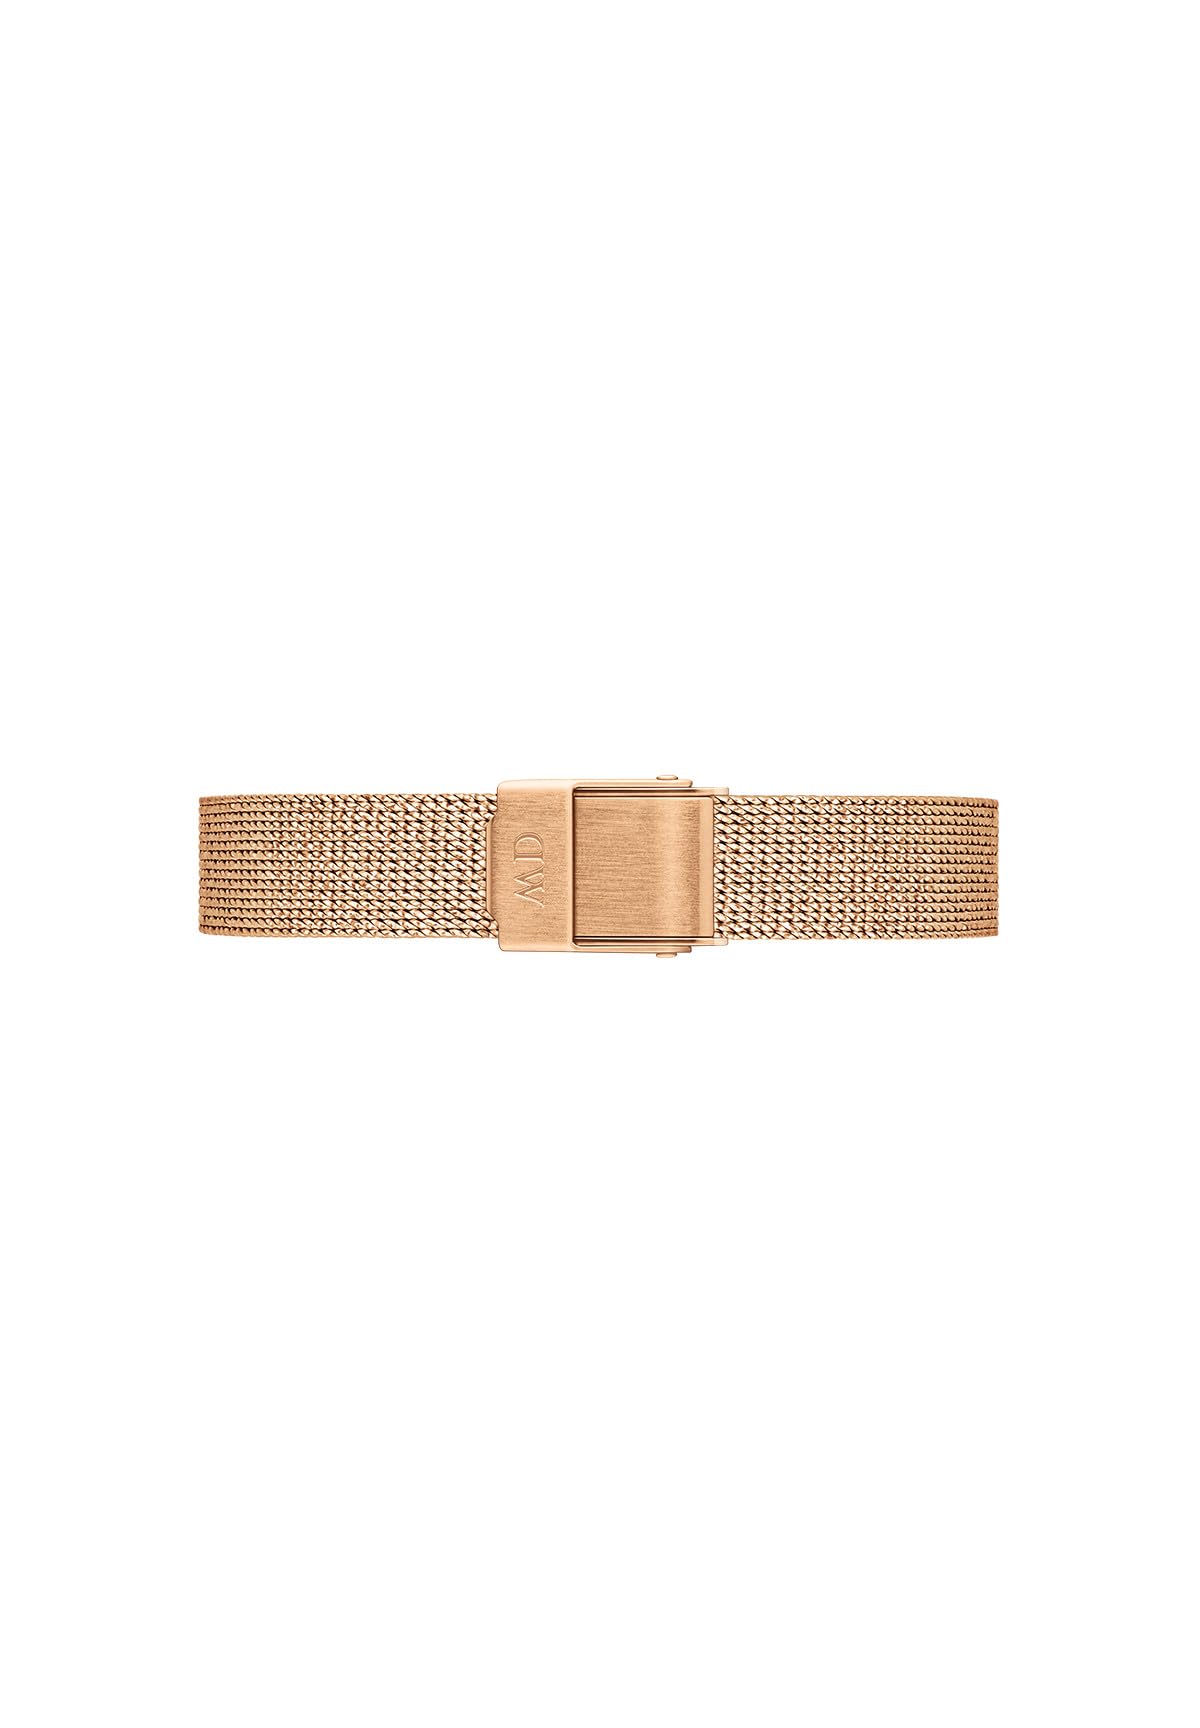 Daniel Wellington Quadro Melrose Watch, Rose Gold Mesh Bracelet, 20x26mm